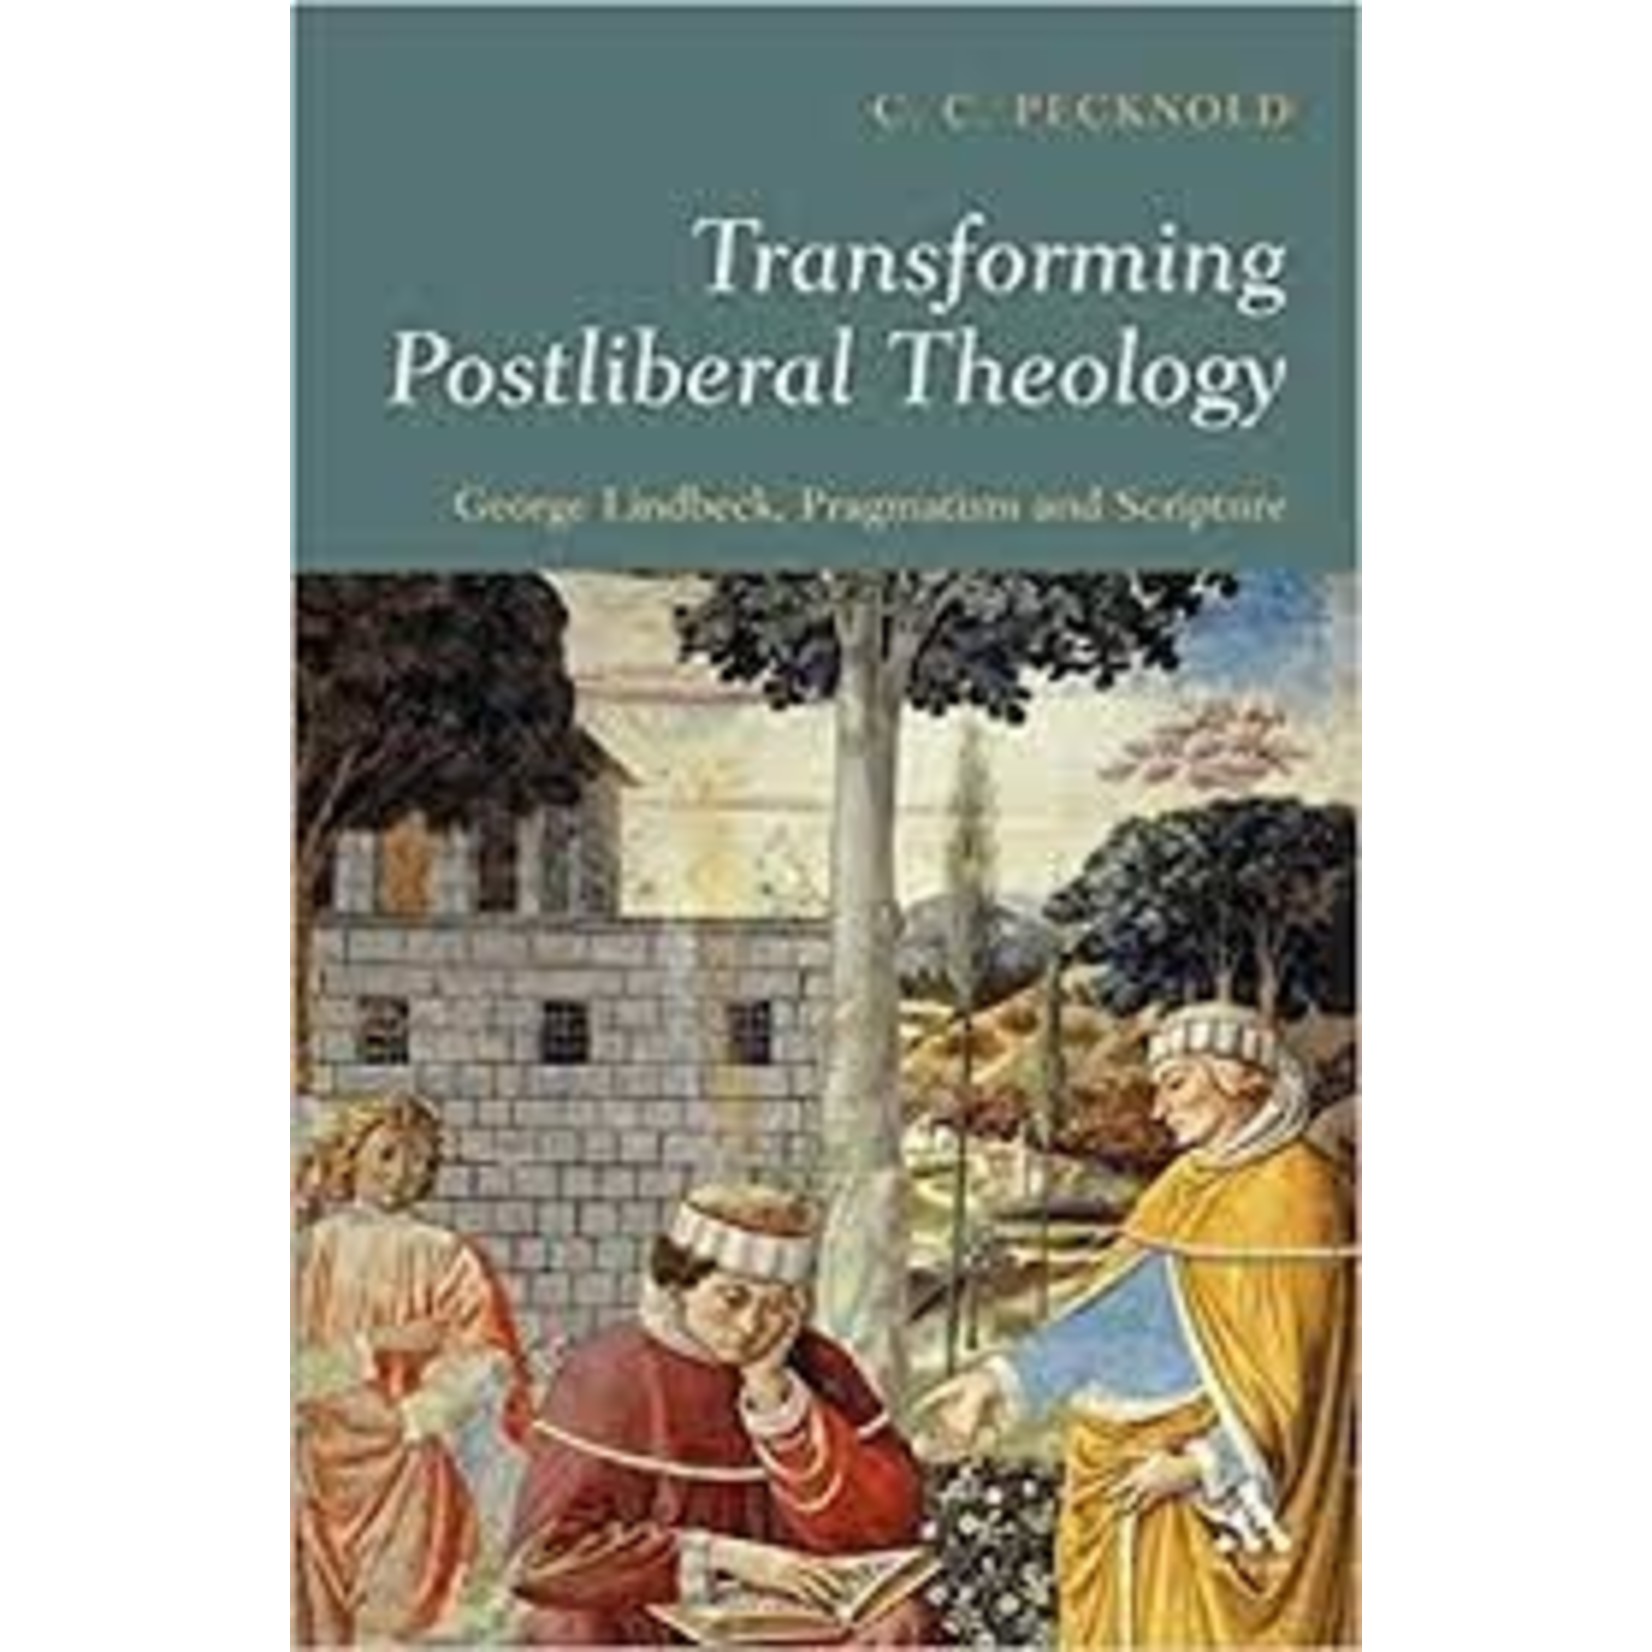 Transforming Postliberal Theology